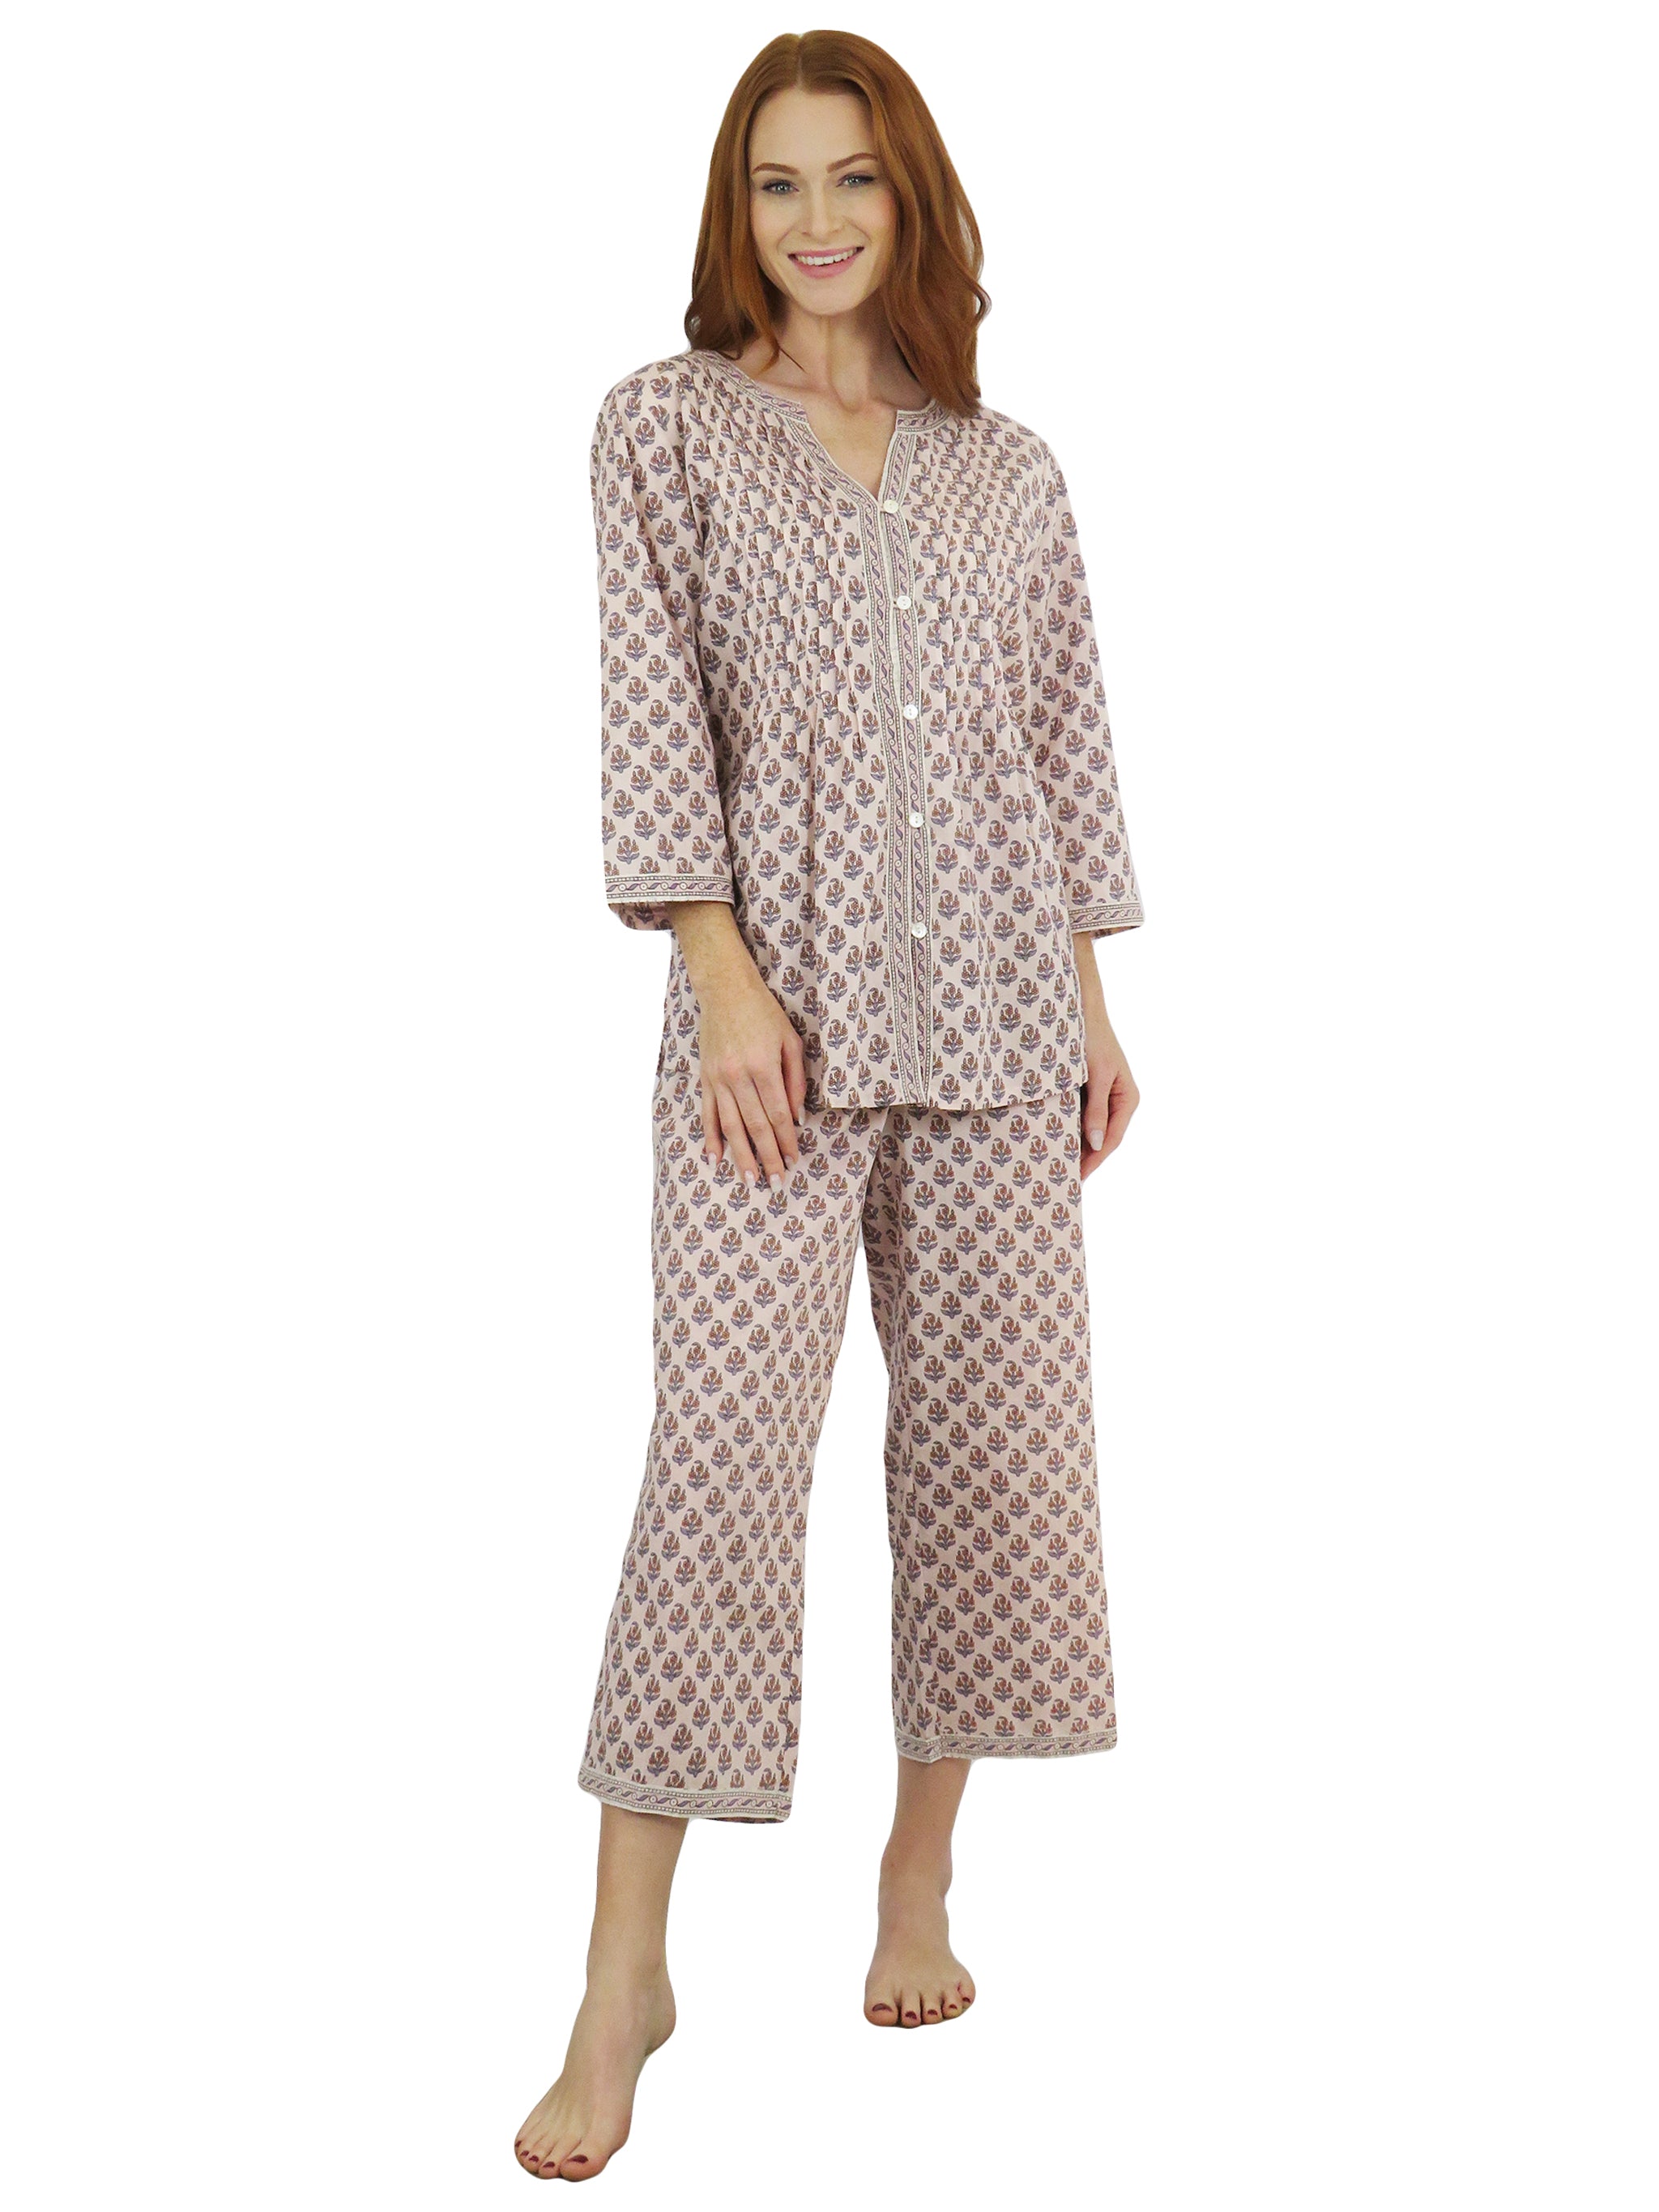 ENJOYNIGHT Women's Pajama Sets Cotton Sleepwear Tops with Capri Pants Cute  Pjs